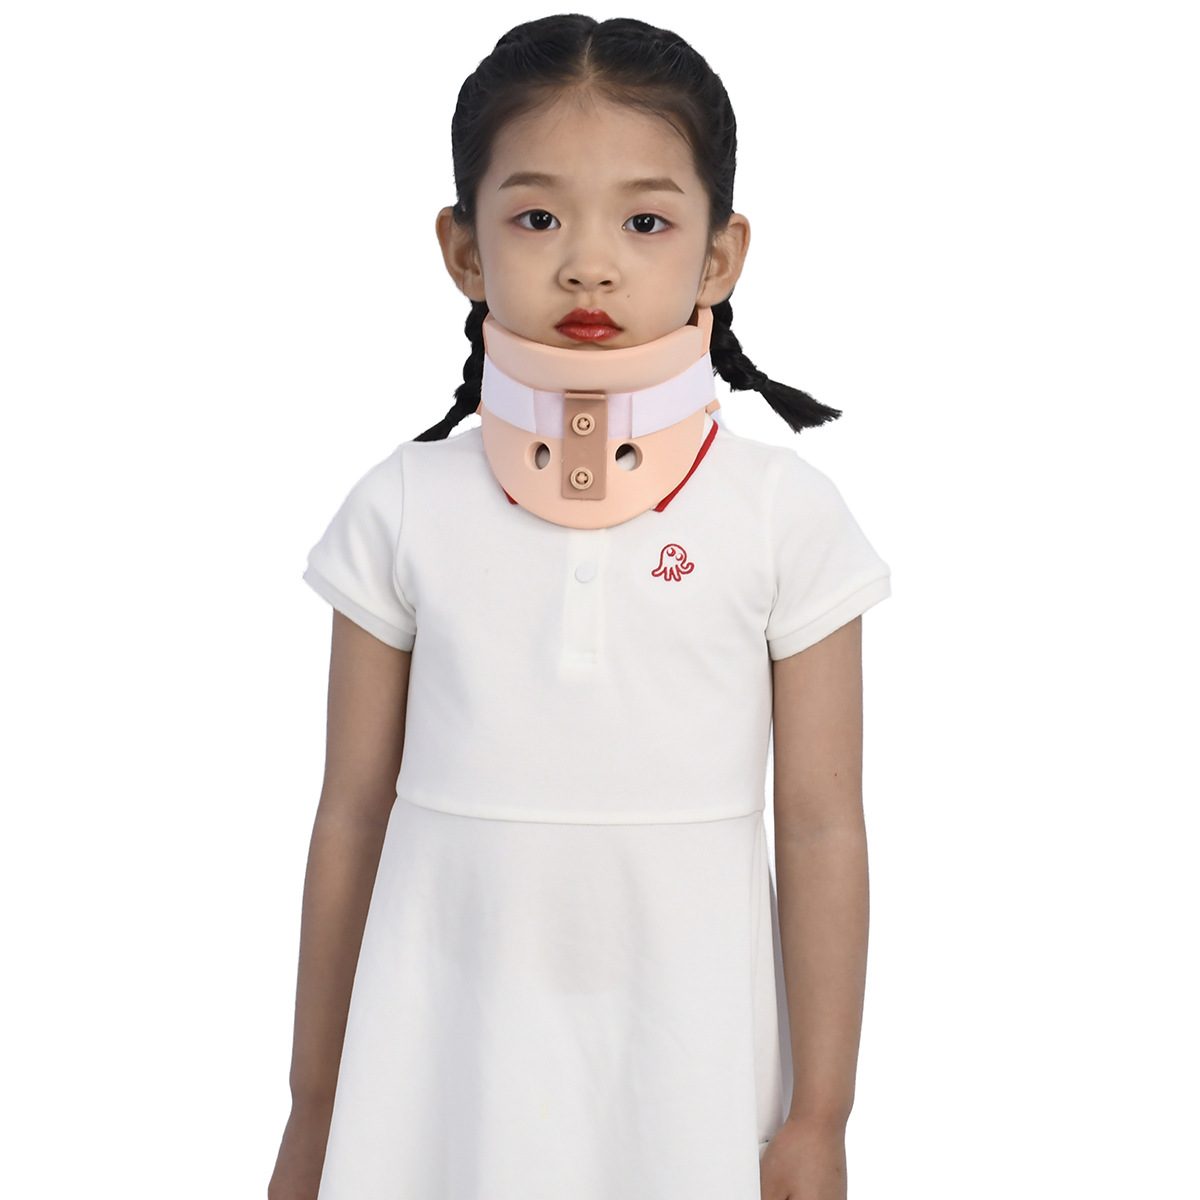 Ihowuliseyili K-017 Adjustable Children's Polymer Material Fixed Neck Collar